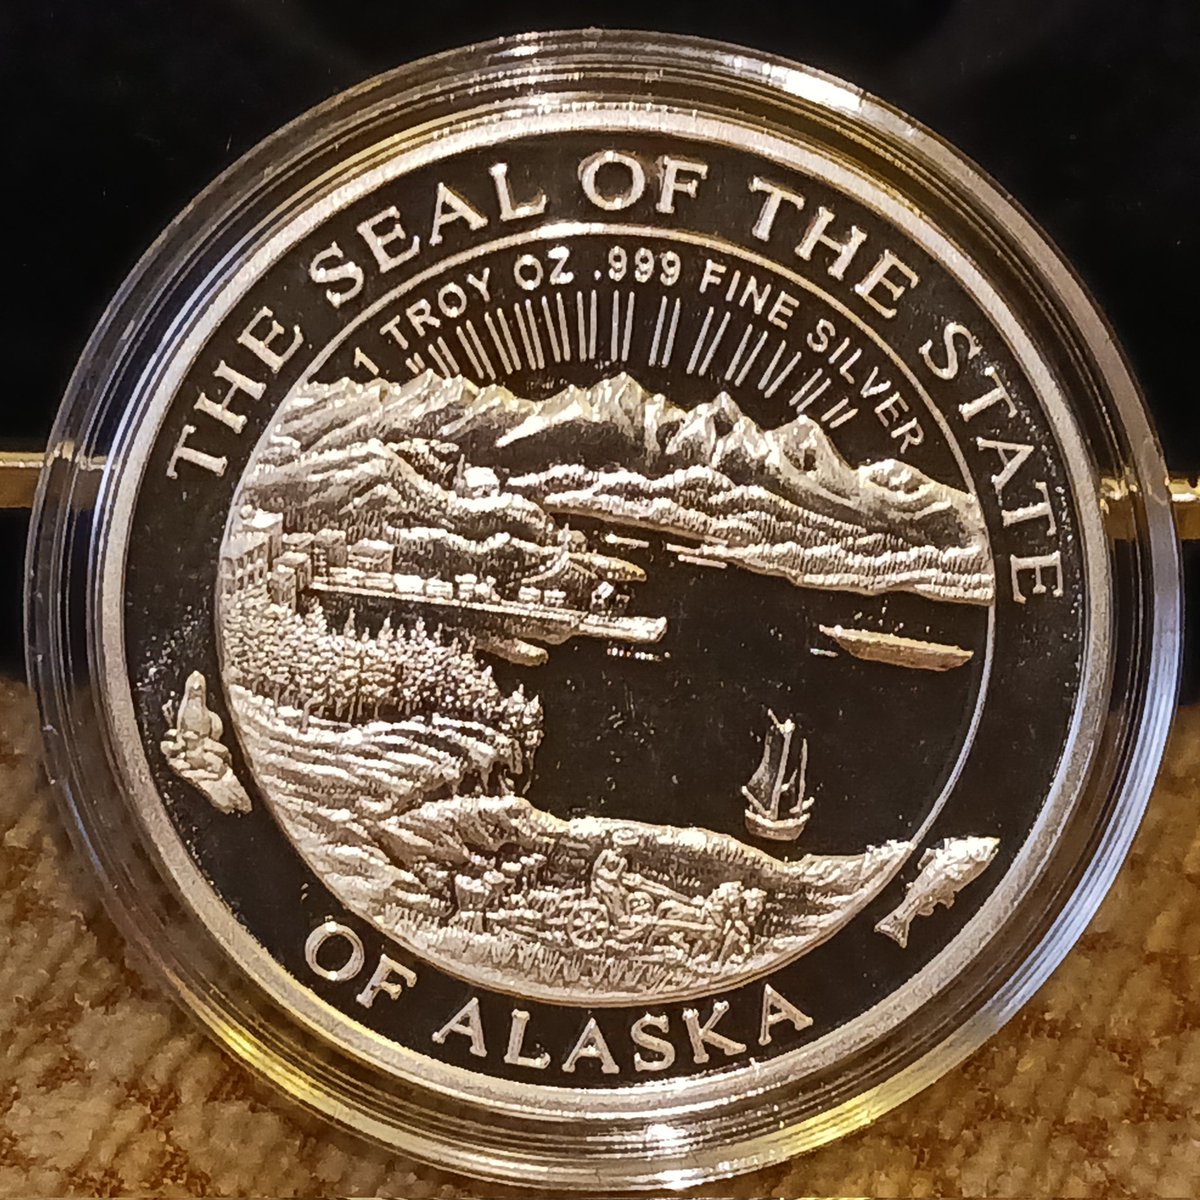 Found a souvenir coin in Ketchikan I had to have, silver Wolf! #silver #Alaska #Wolf #Ketchikan #Anniversarytrip #Alaskacruise #coincollector